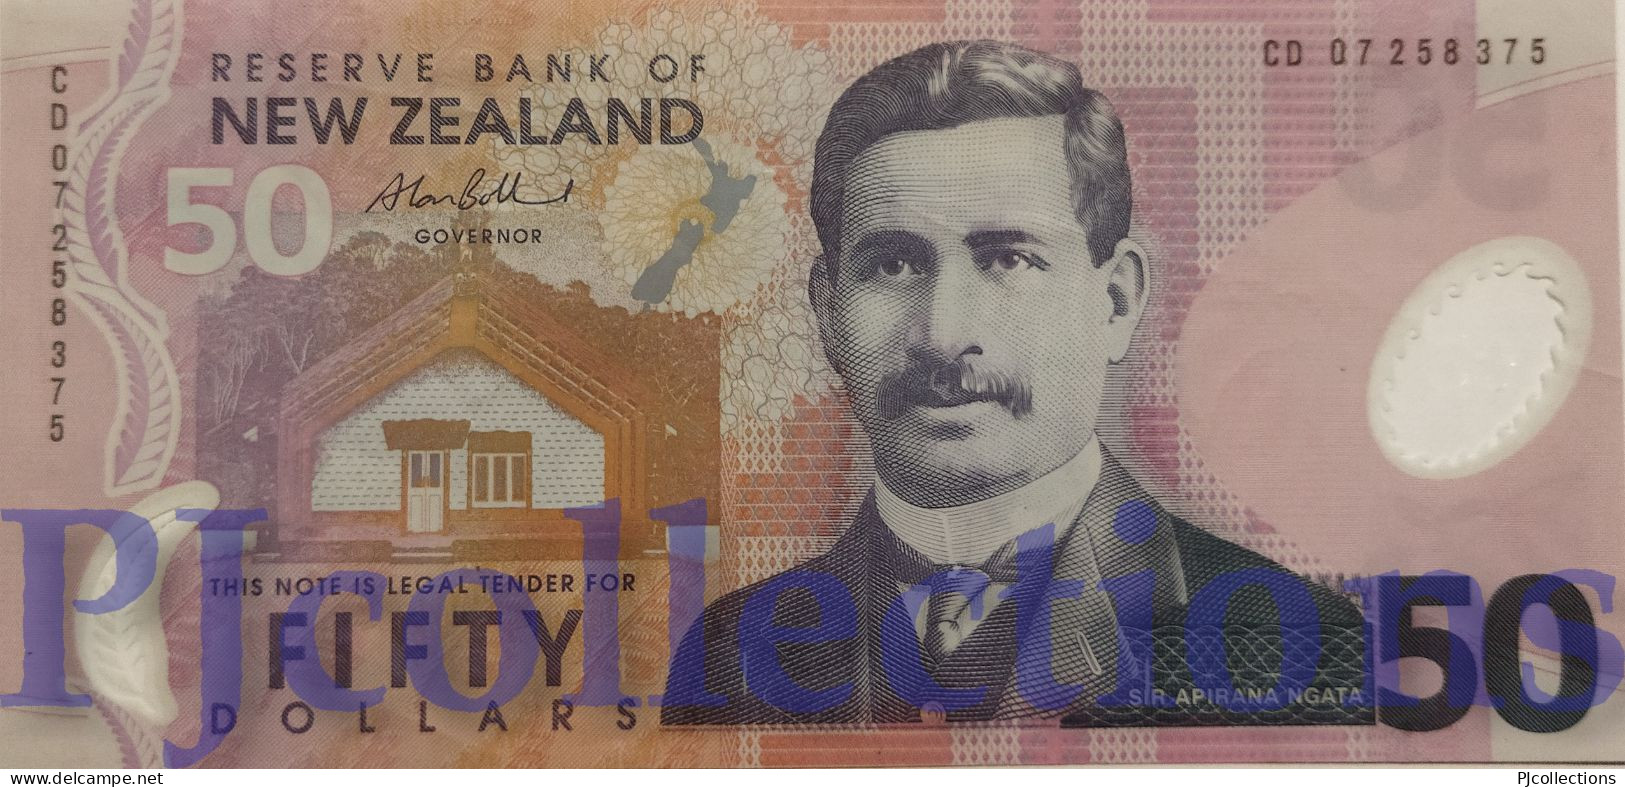 NEW ZEALAND 50 DOLLARS 2007 PICK 188b POLYMER AXF - Neuseeland